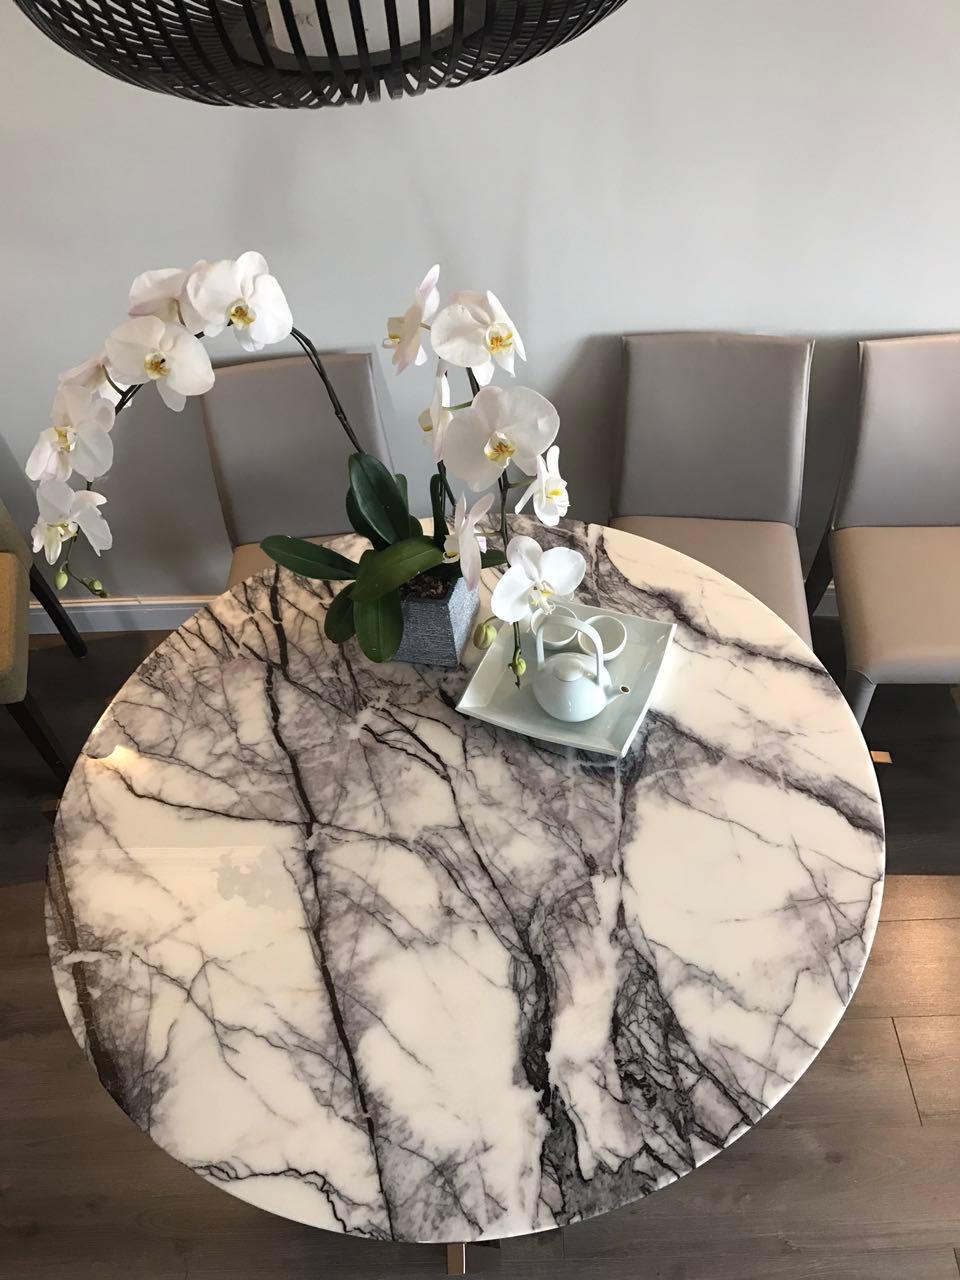 NORDST EMMA Dining Table, Italian Black Eagle Marble, Danish Modern Design, New For Sale 1